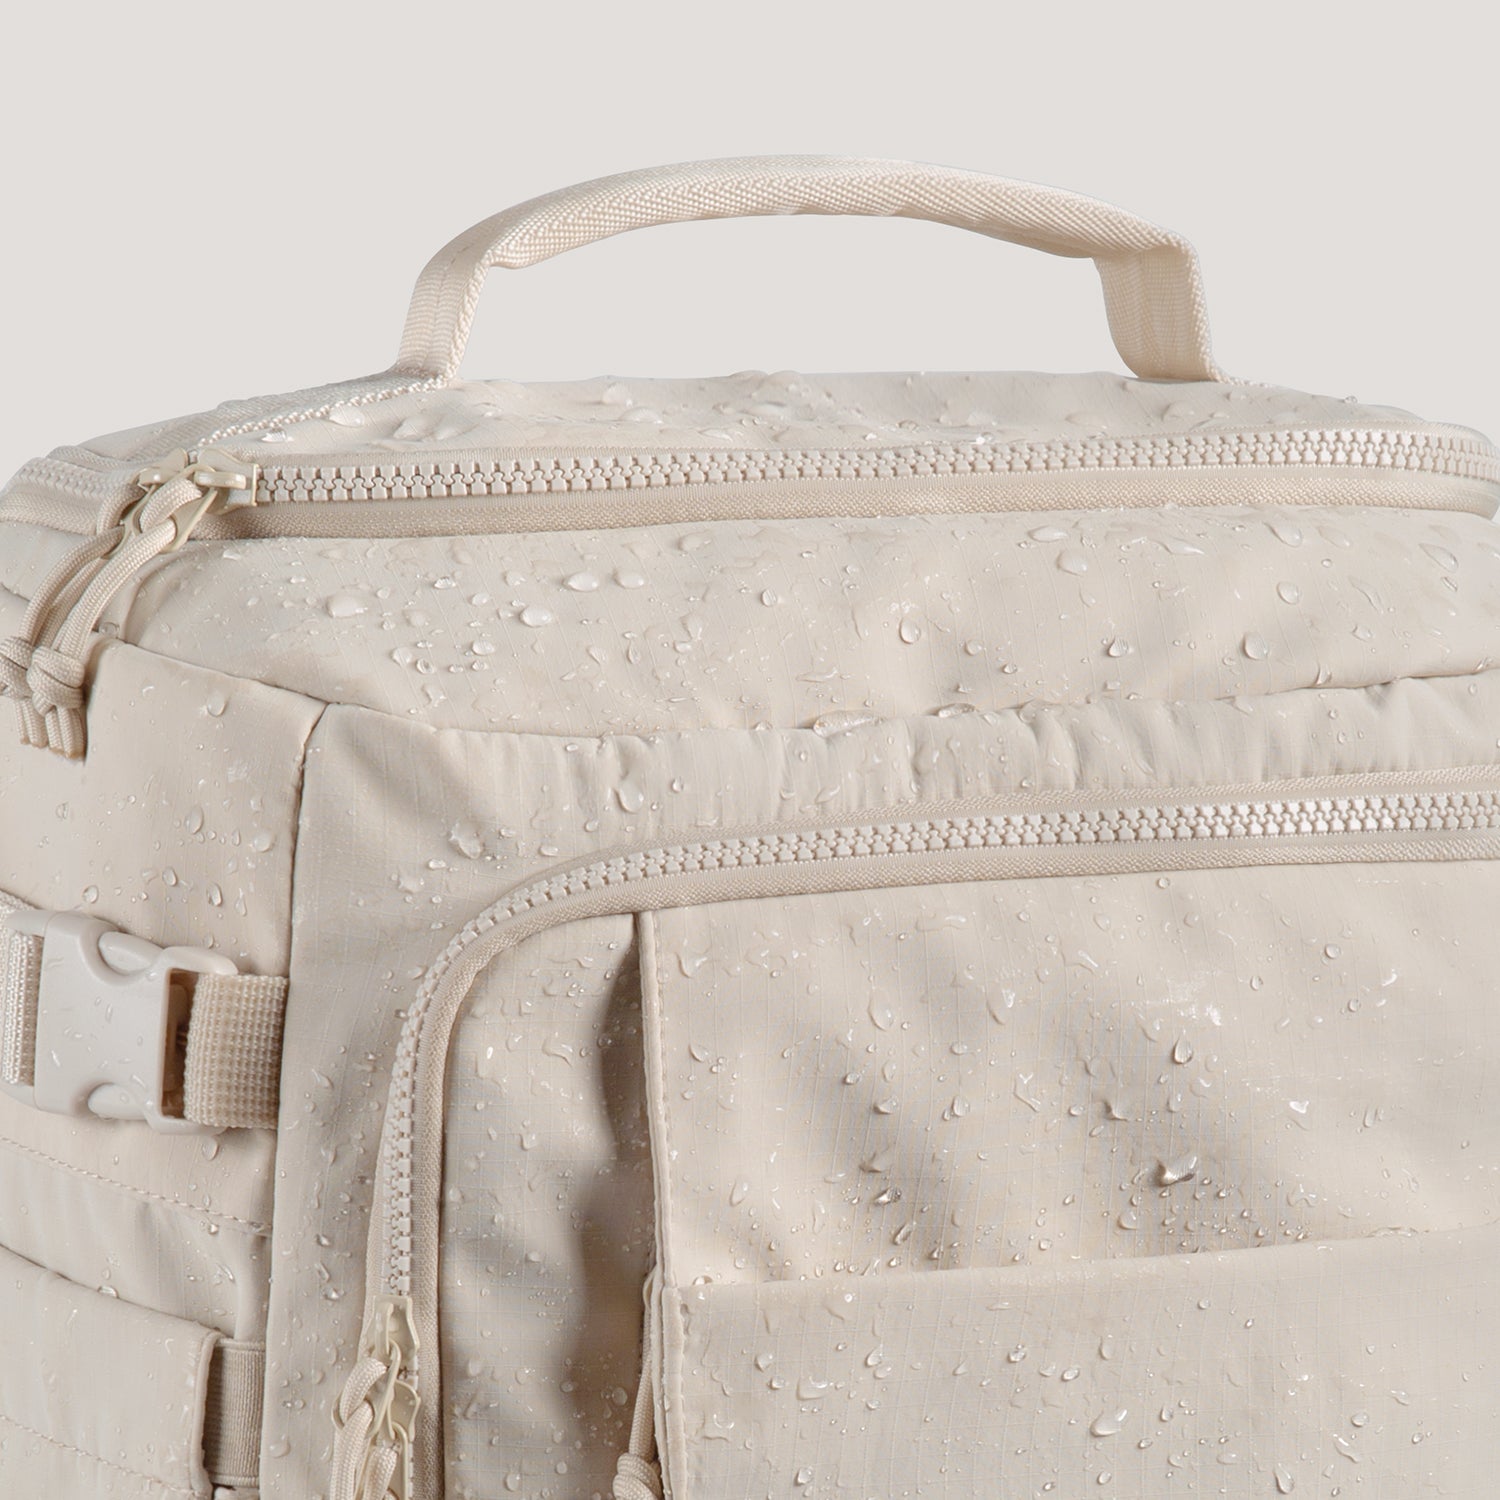 Best Waterproof Travel Backpacks for Women with Top Handles